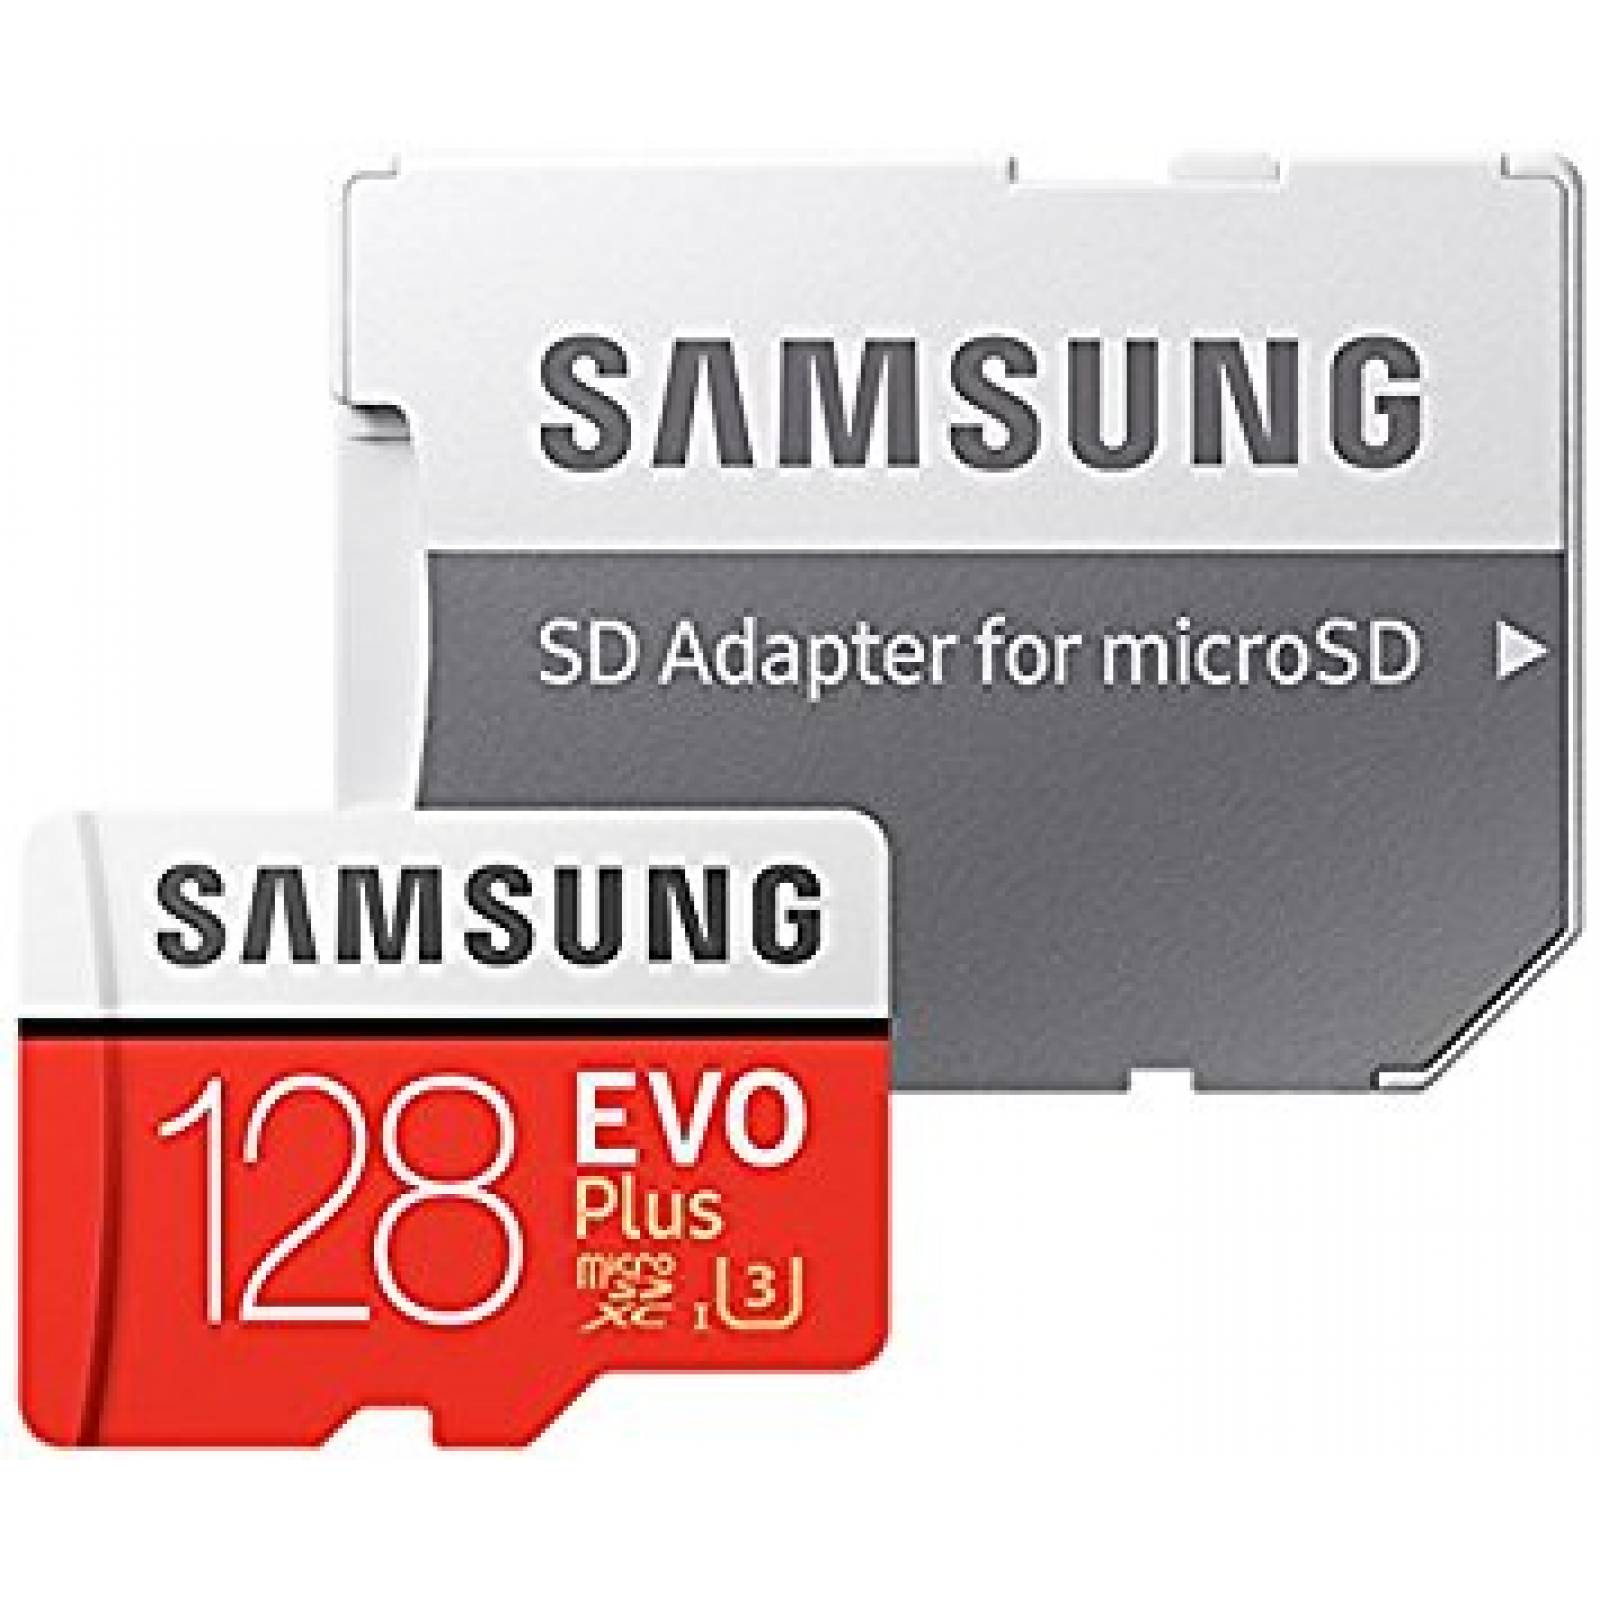 Memoria Microsd Samsung Evo Plus 128gb Sdxc Class 10 C/adap